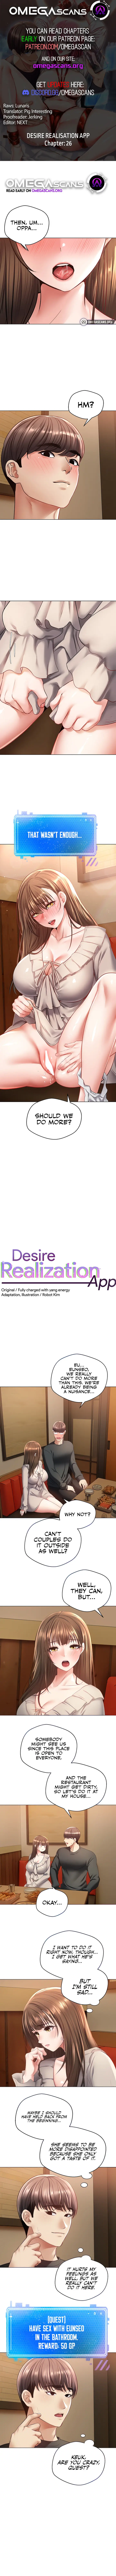 desire-realization-app-chap-26-0